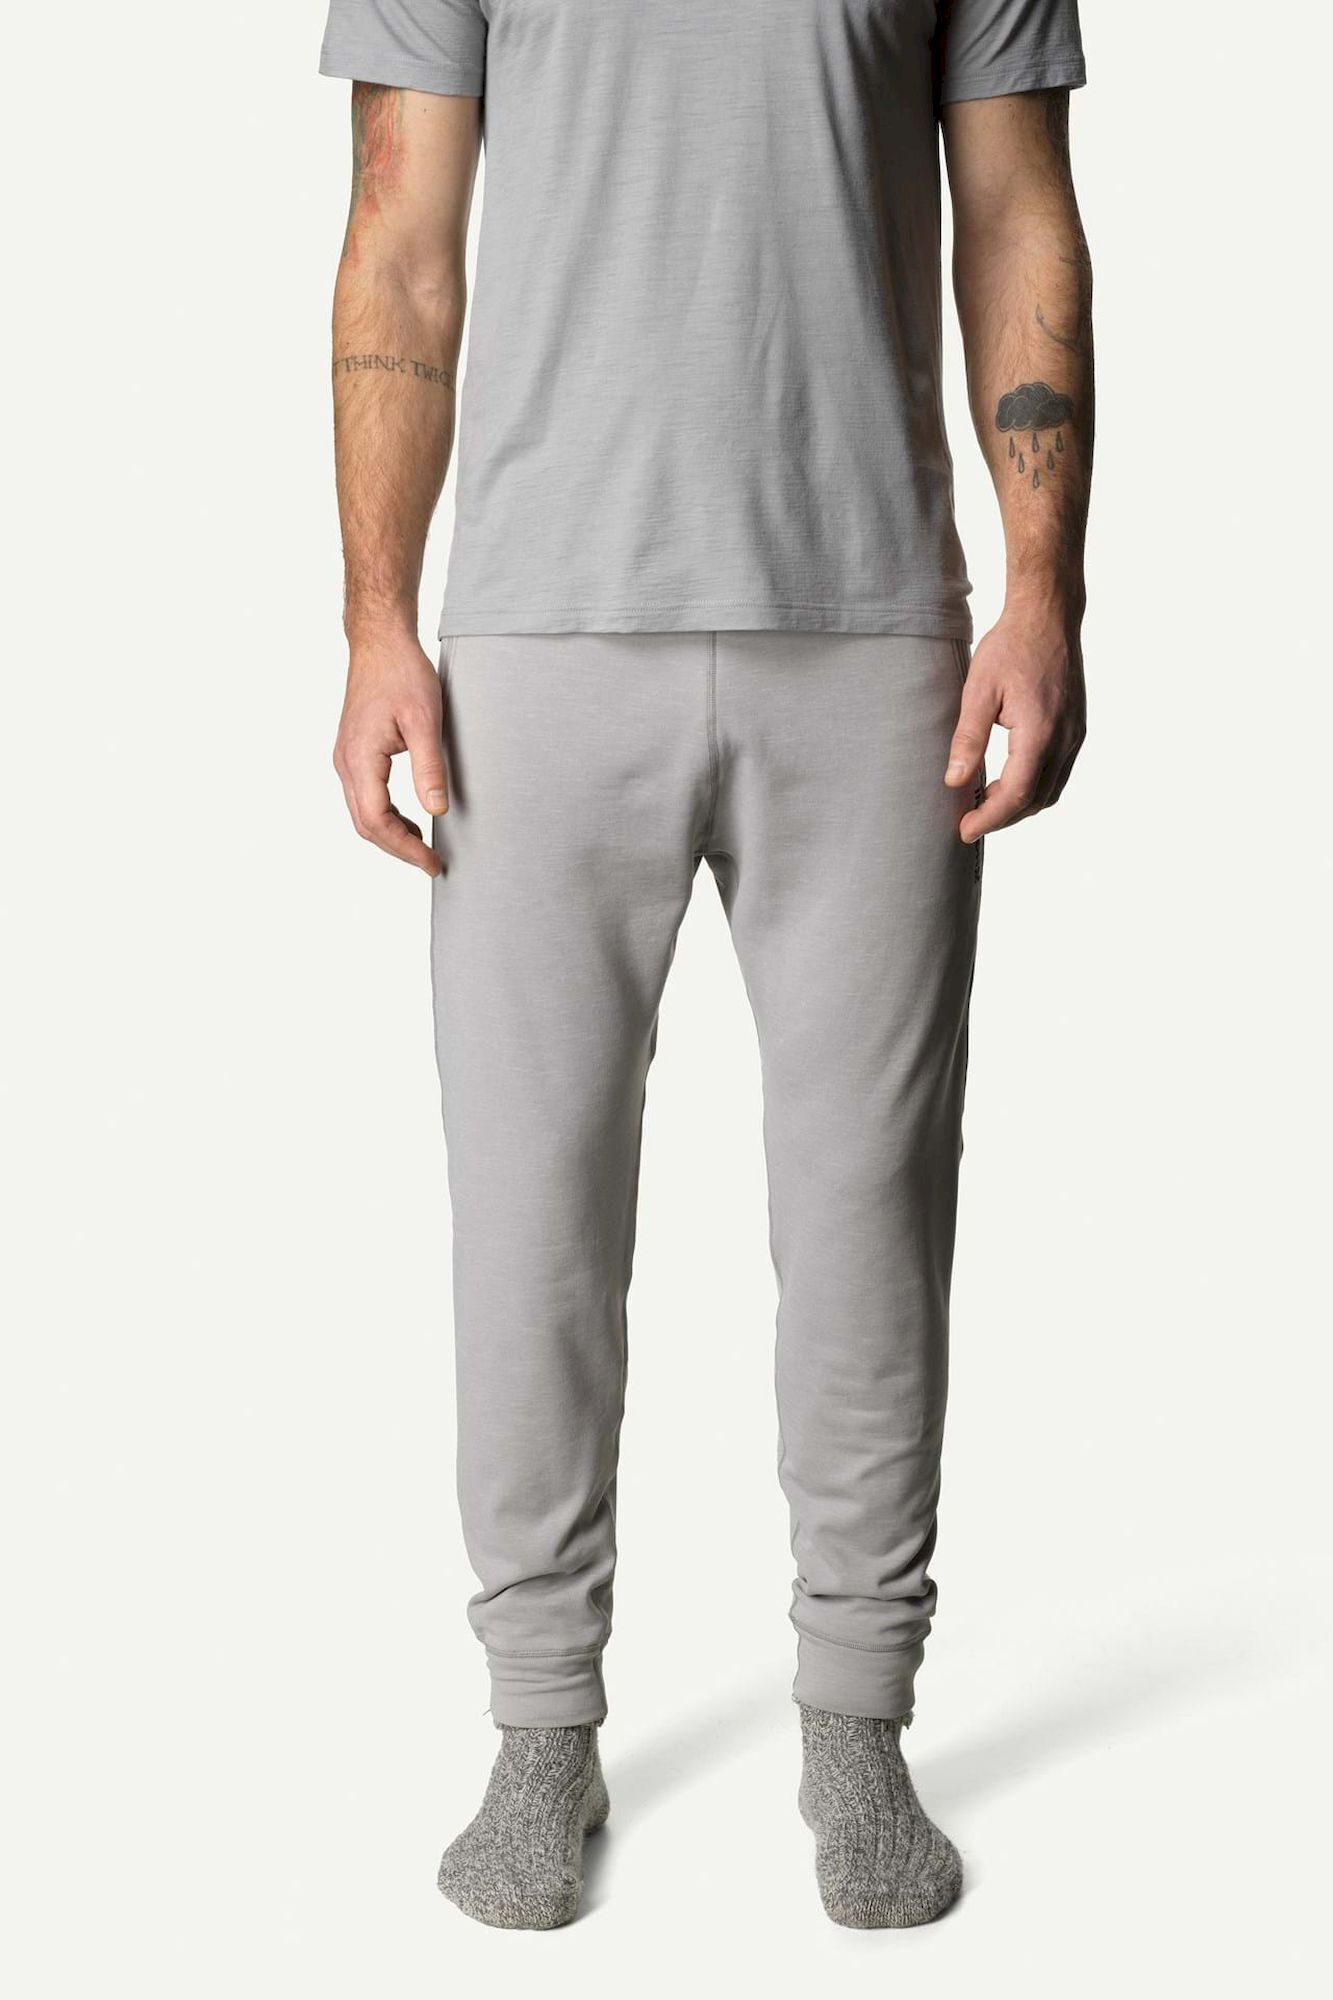 Houdini Sportswear Outright Pants - Pantalones - Hombre | Hardloop